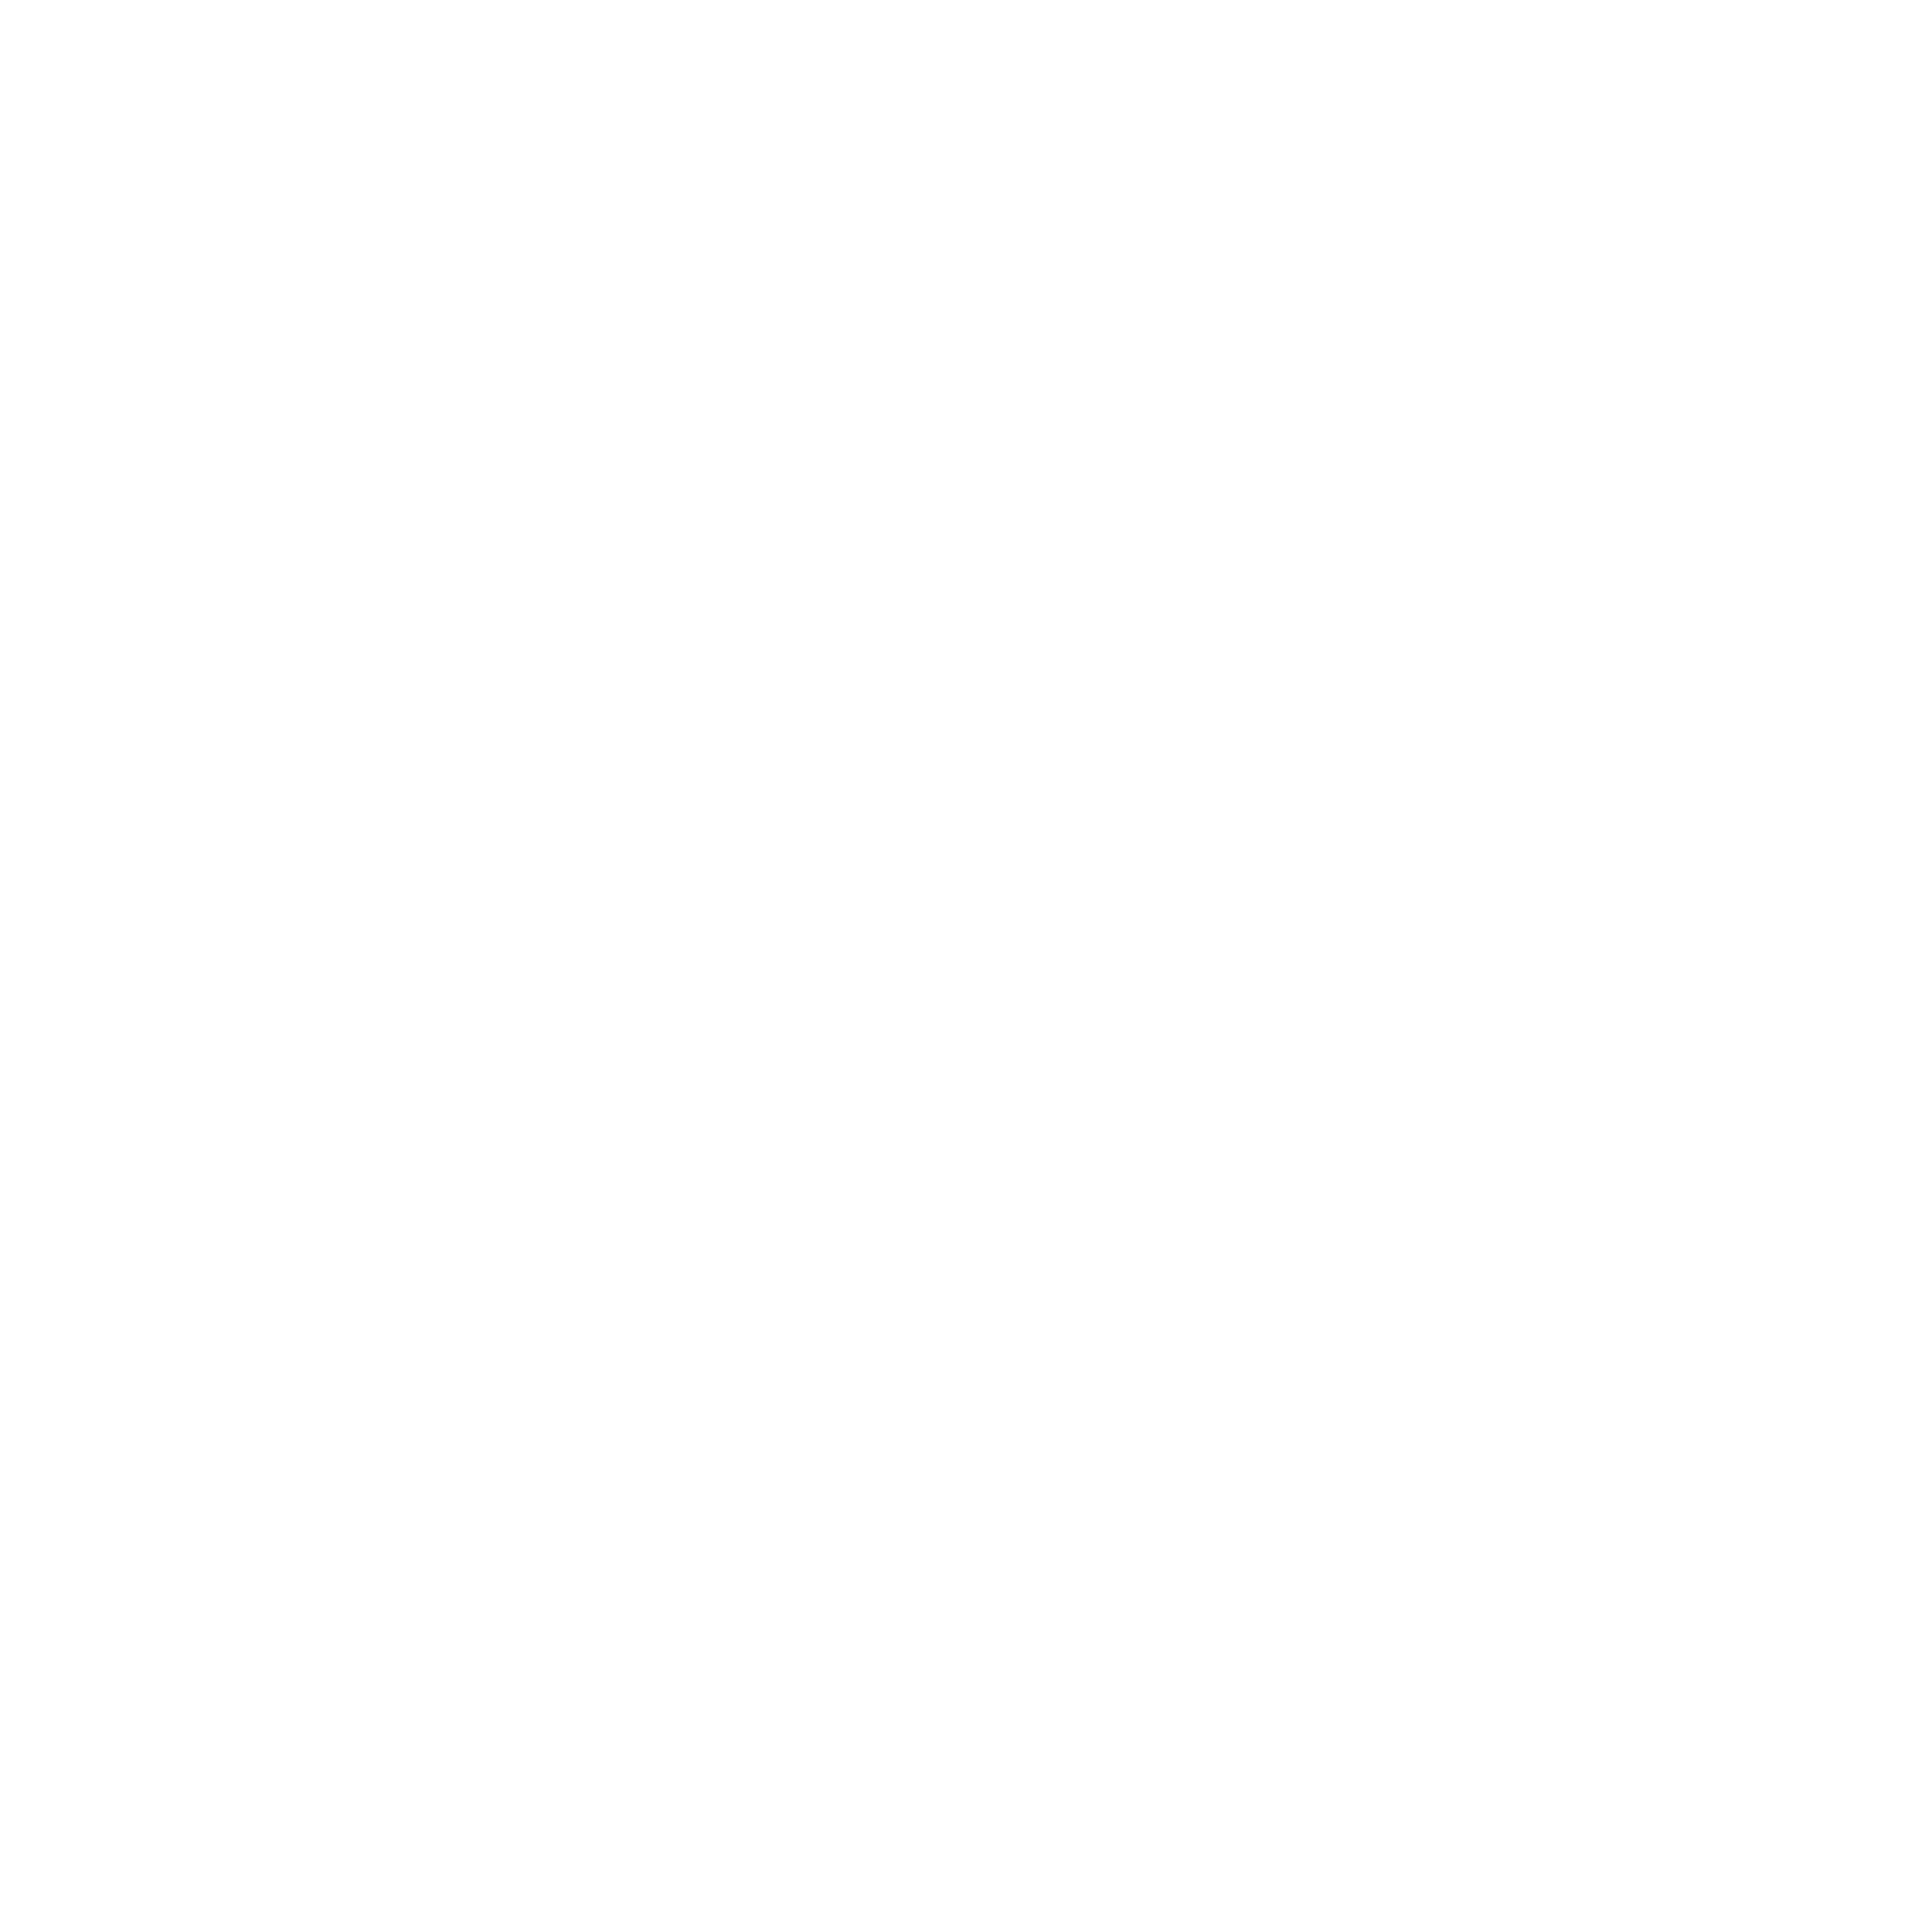 biltema-4186-logo-black-and-white